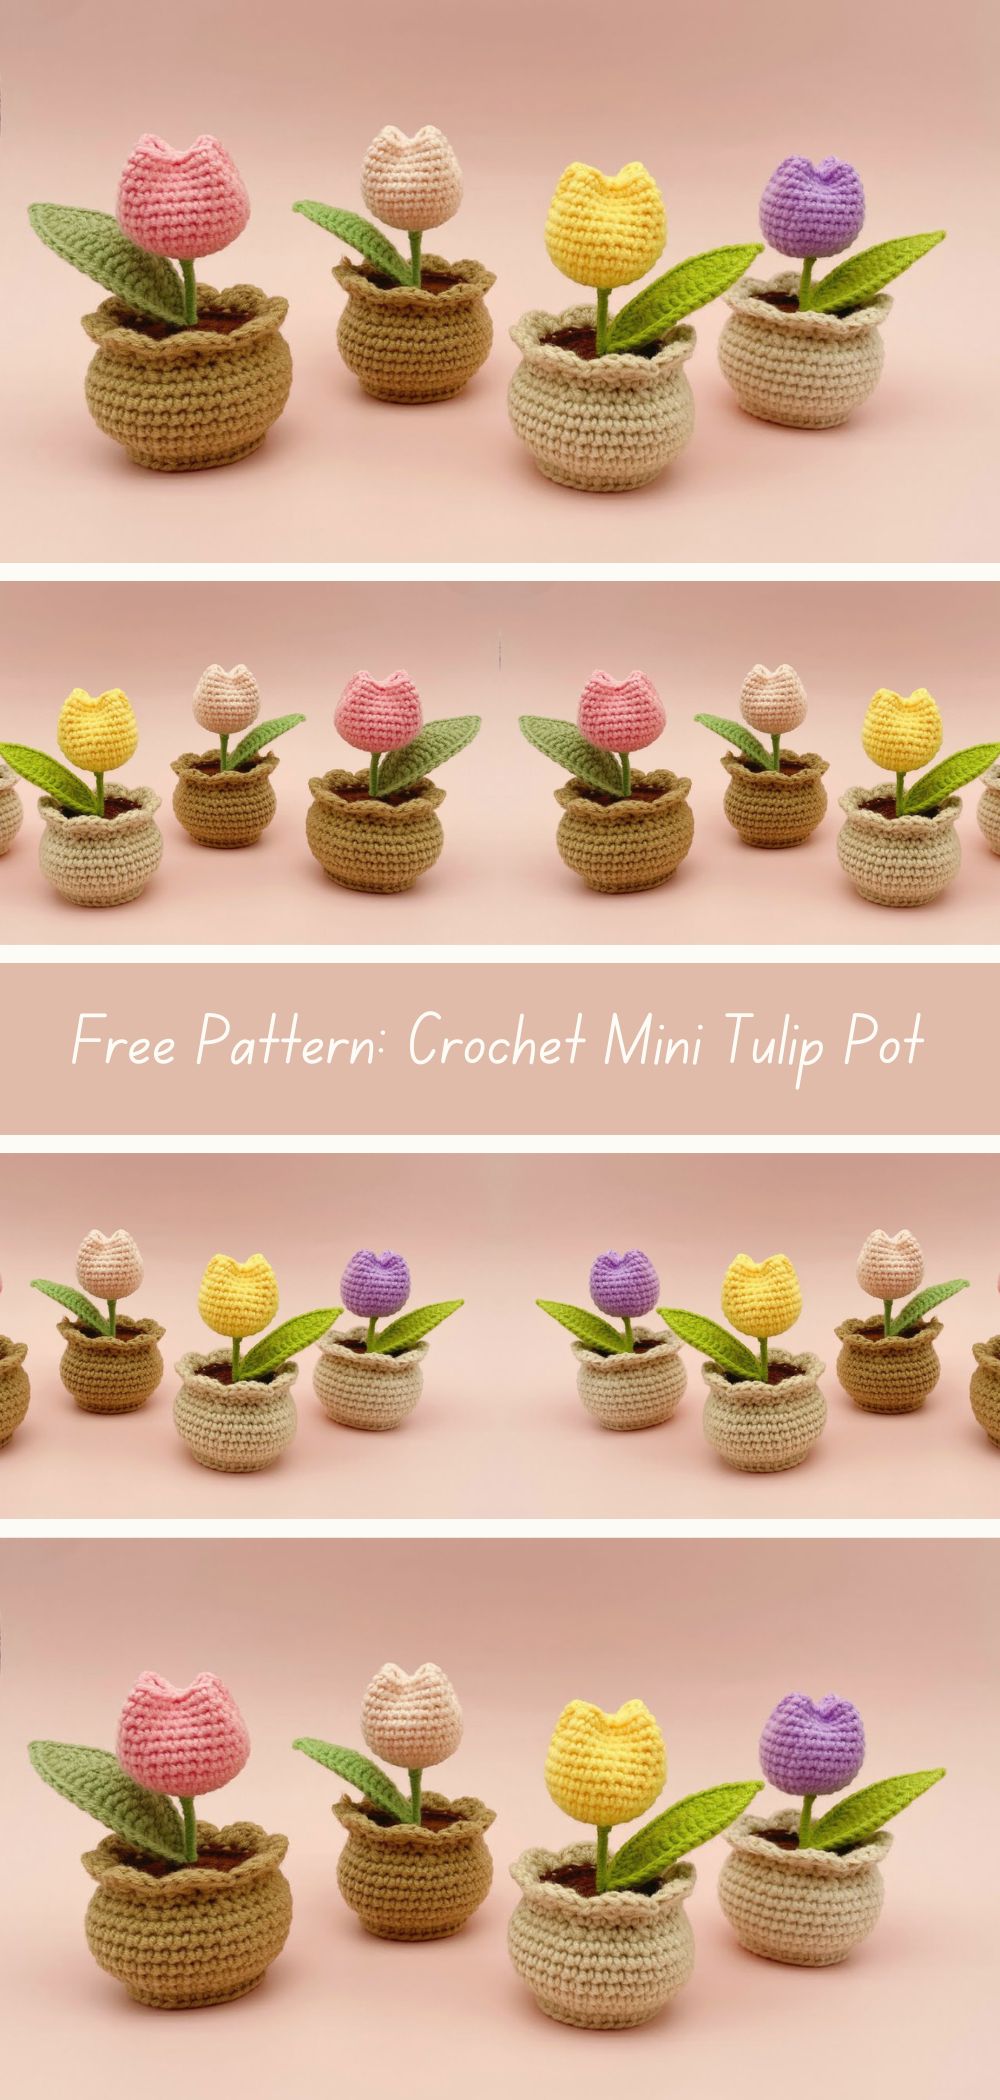 Free Pattern: Crochet Mini Tulip Pot - Create a charming crochet mini tulip pot with this free pattern